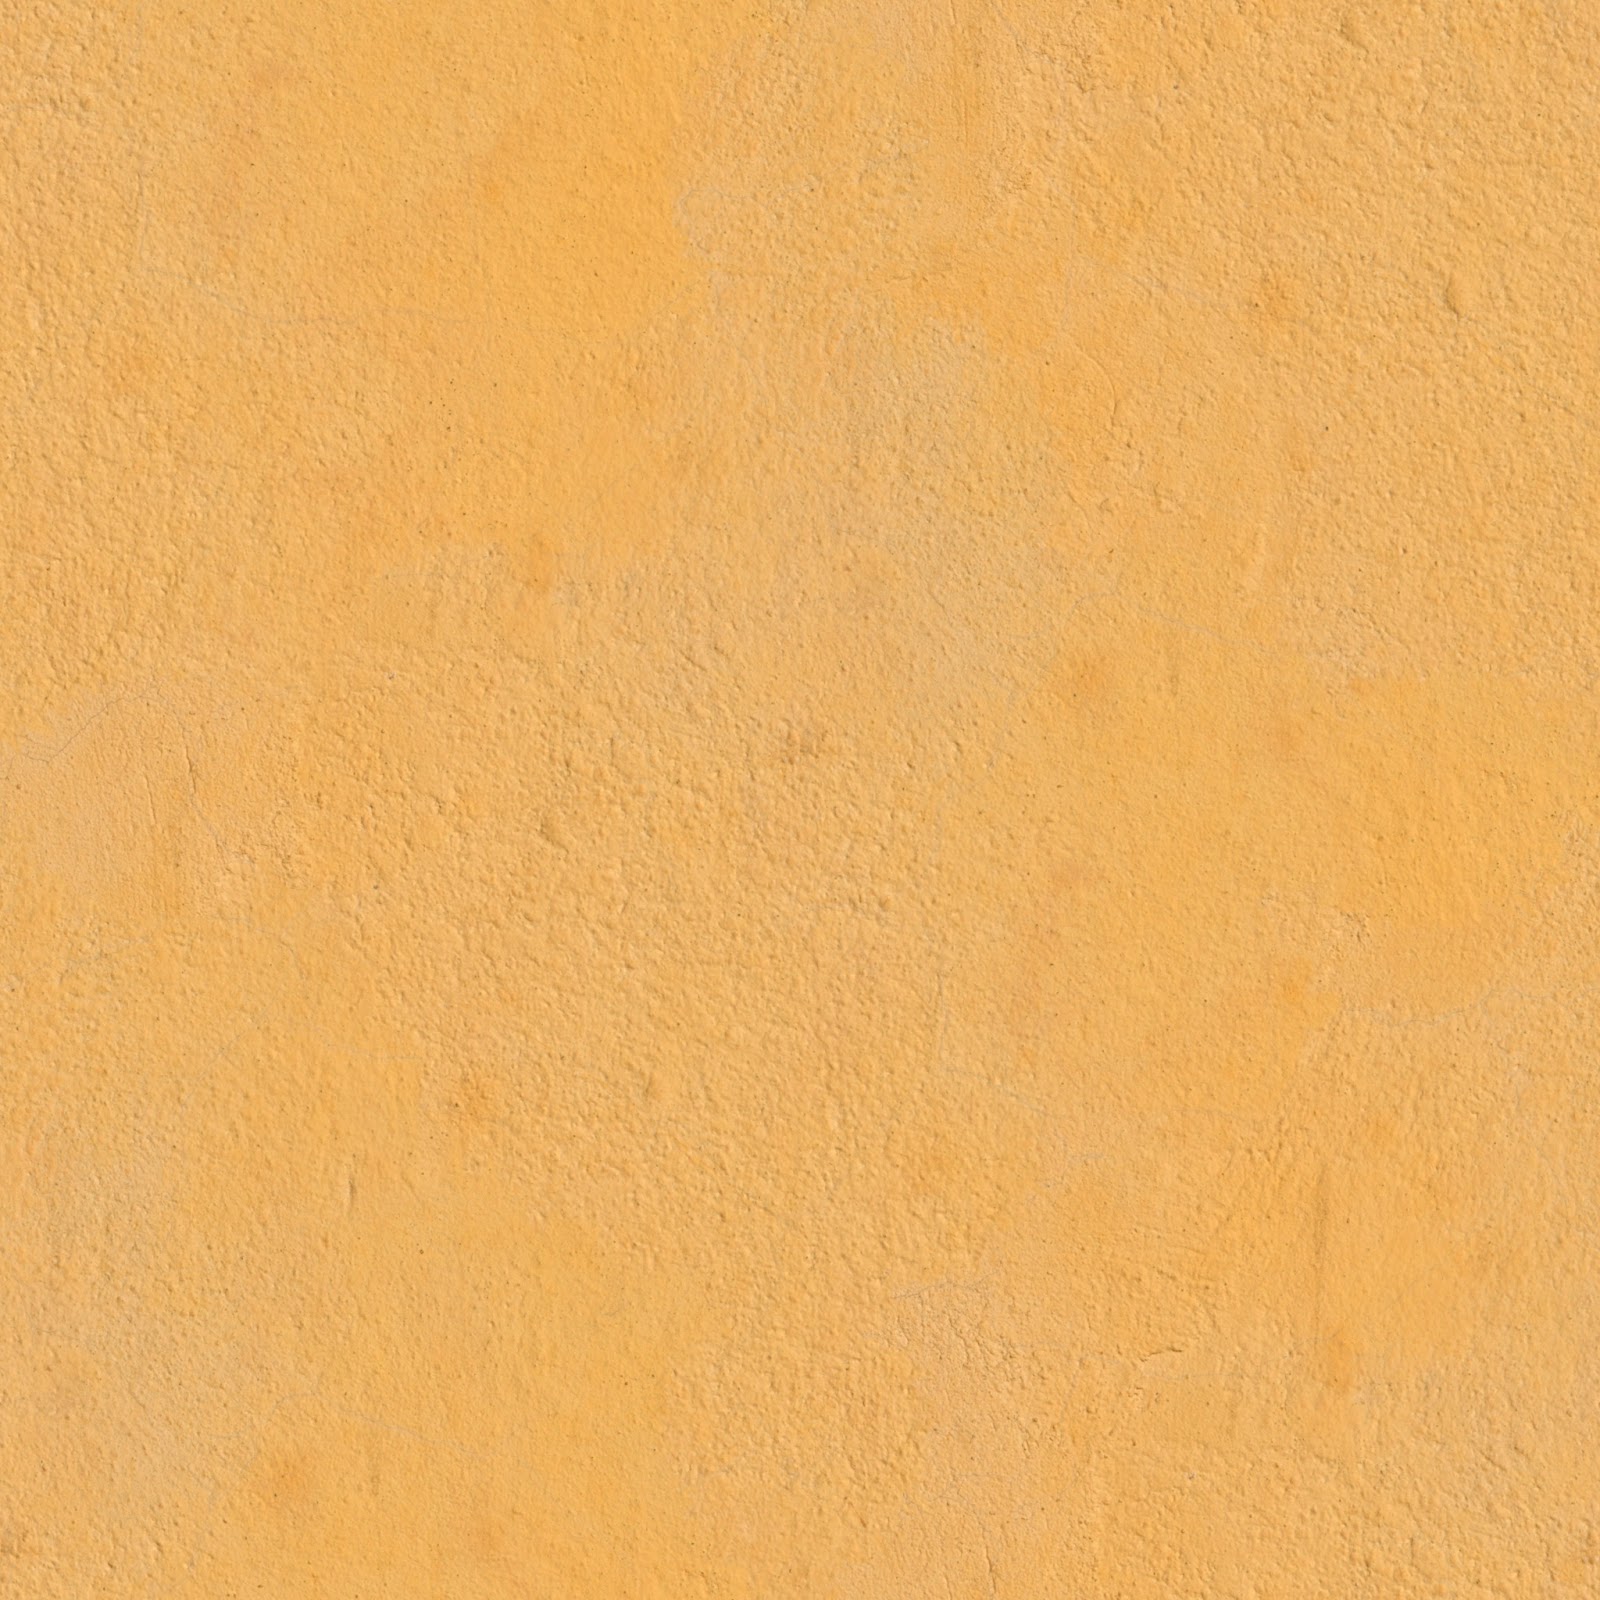 High Resolution Seamless Textures: Stucco light orange wall plaster ...